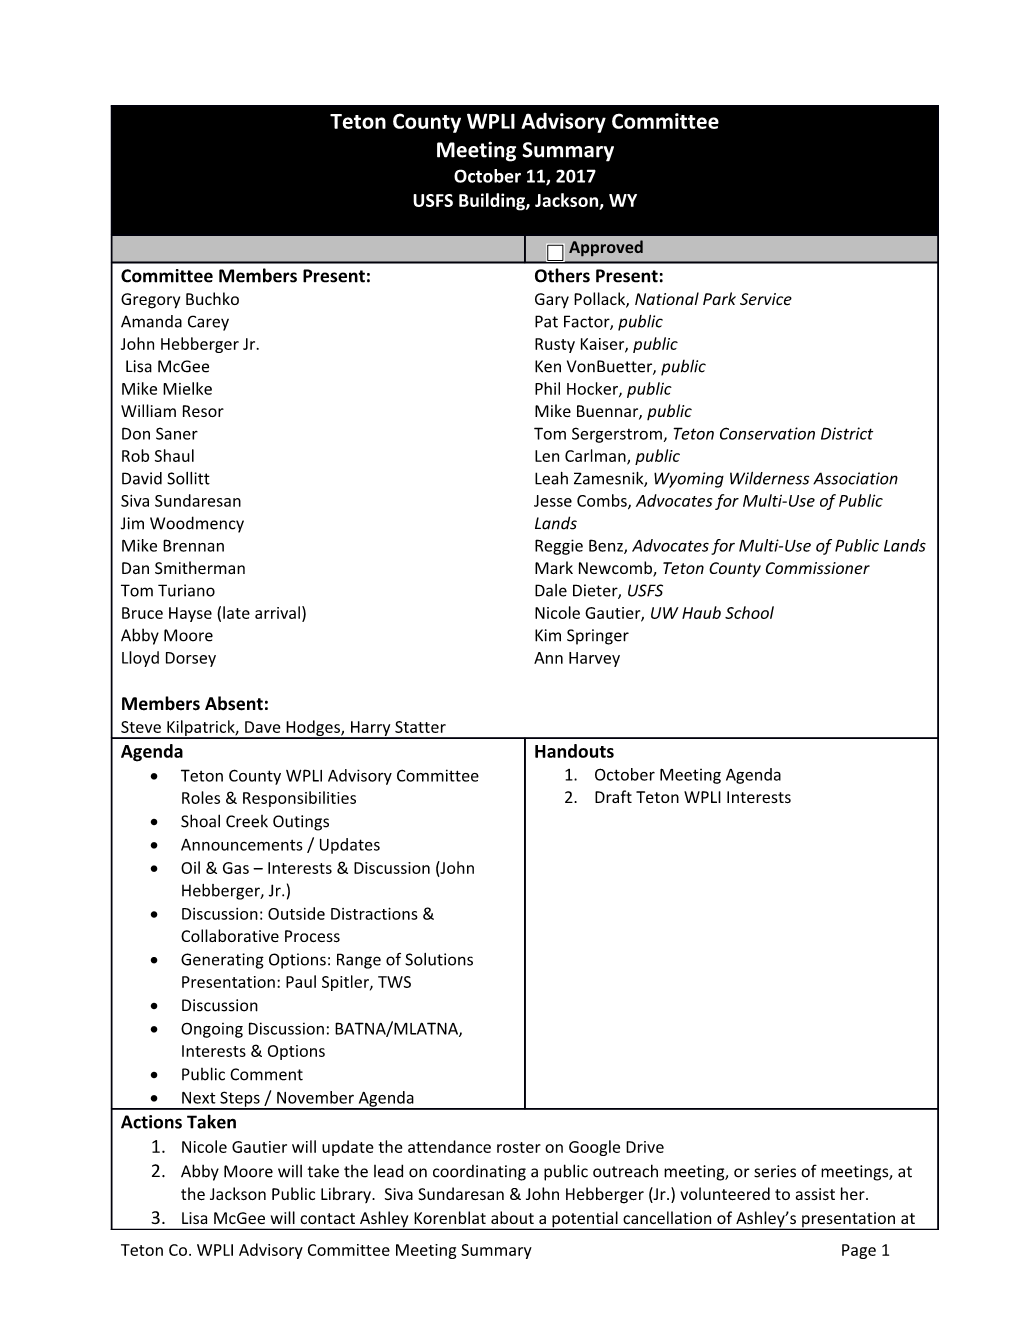 Teton County WPLI Advisory Committee Roles & Responsibilities